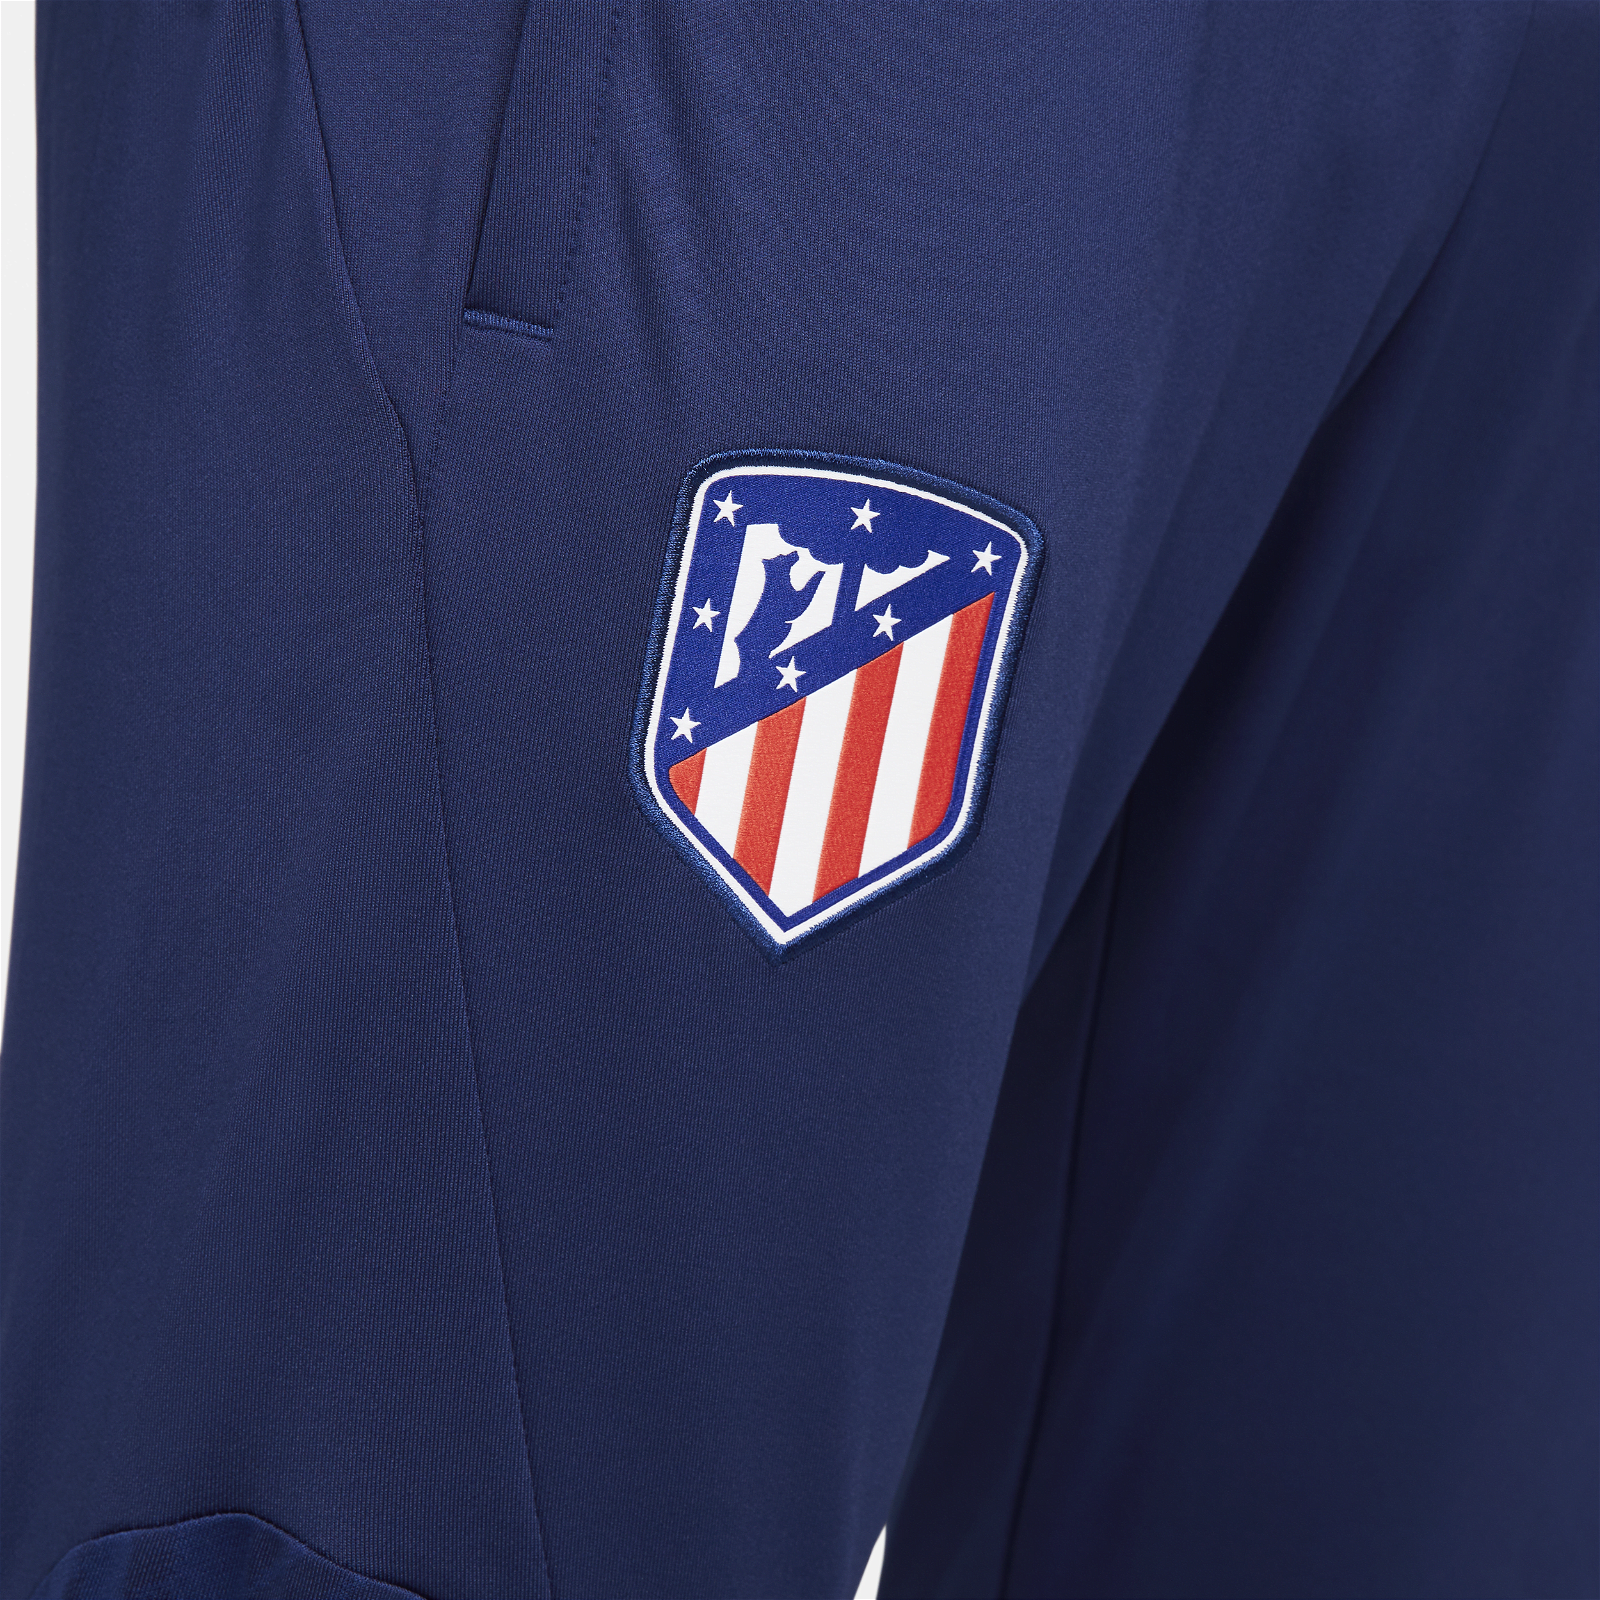 Pánské pleteninové fotbalové kalhoty Dri-FIT Atlético Madrid Strike - Modrá